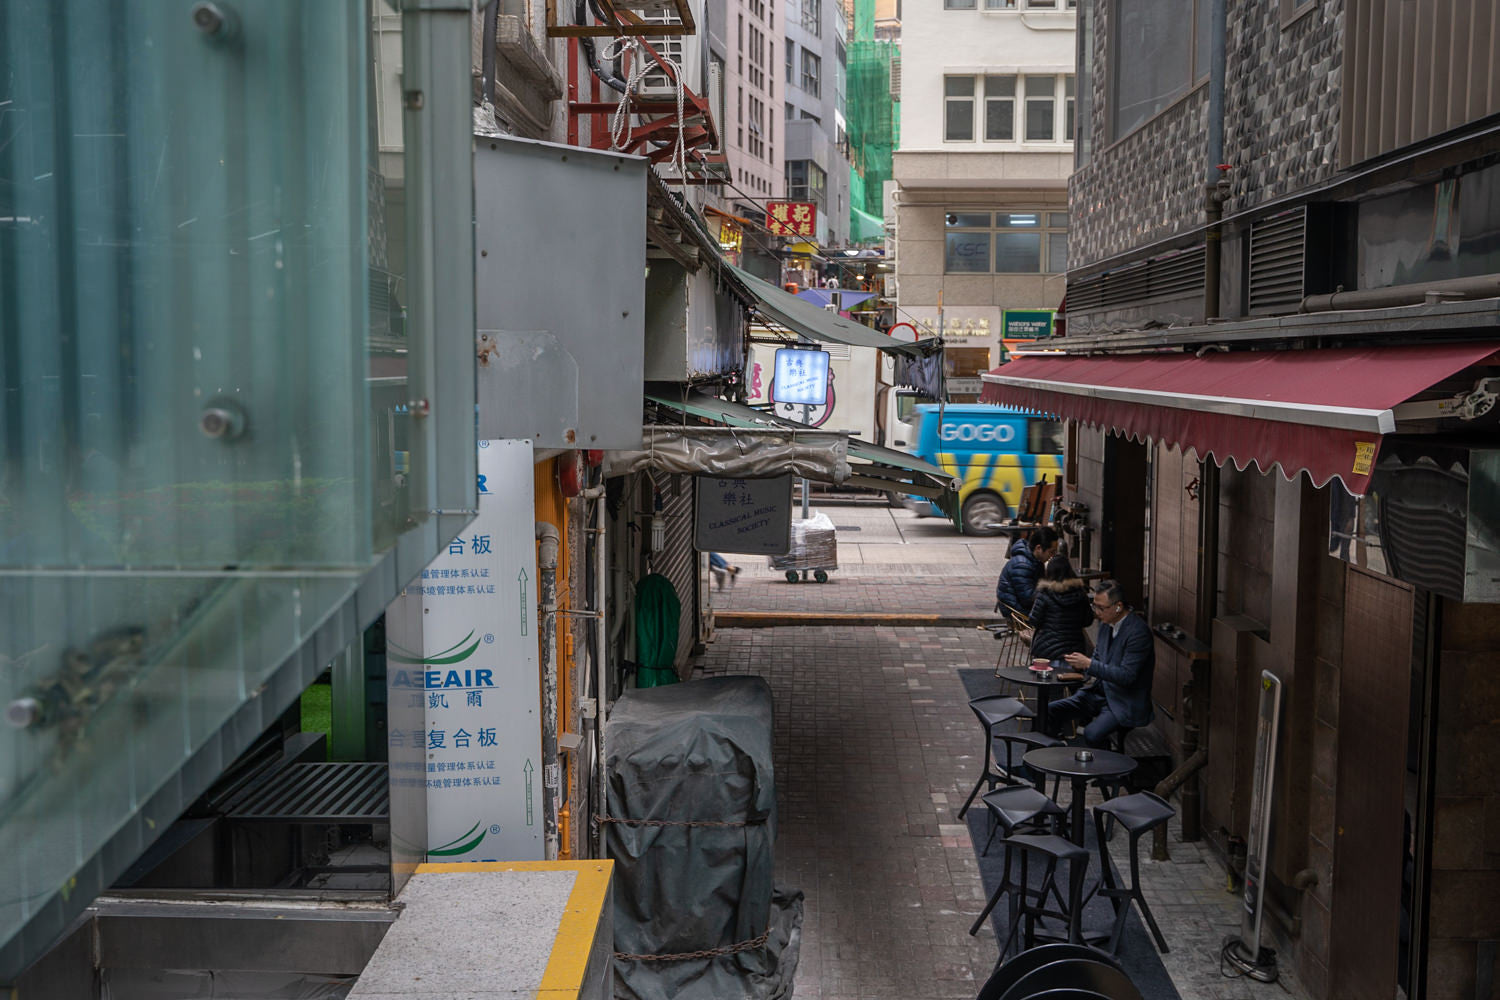 Hong Kong Street Photography Vol.2 / Jun 2019